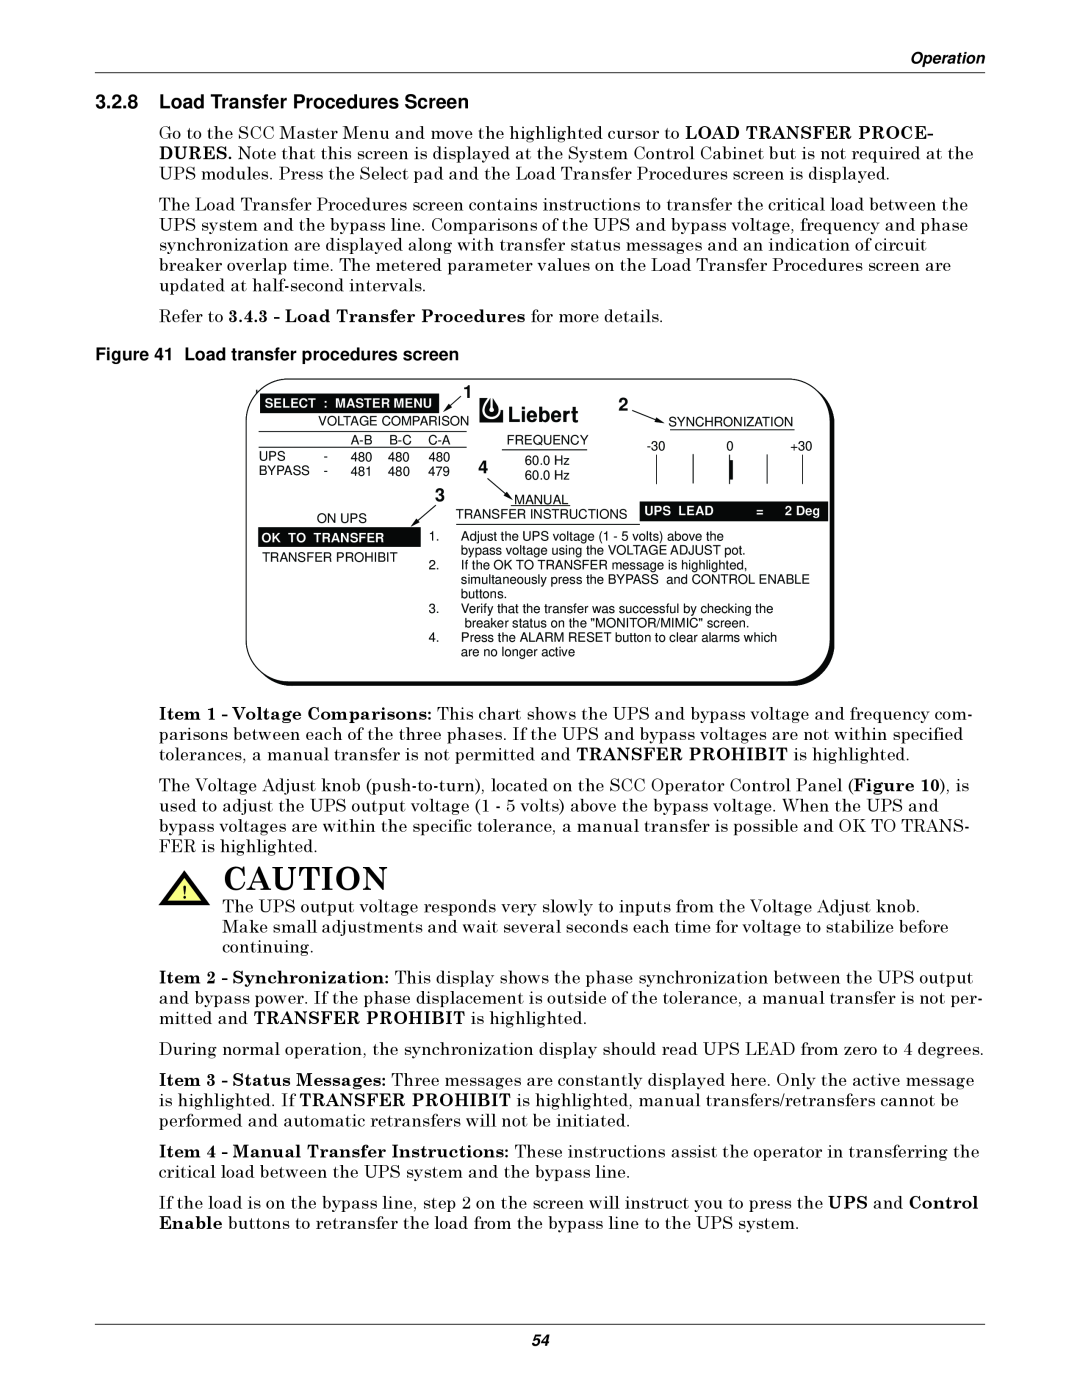 Emerson Series 610 manual Load Transfer Procedures Screen, Load transfer procedures screen 